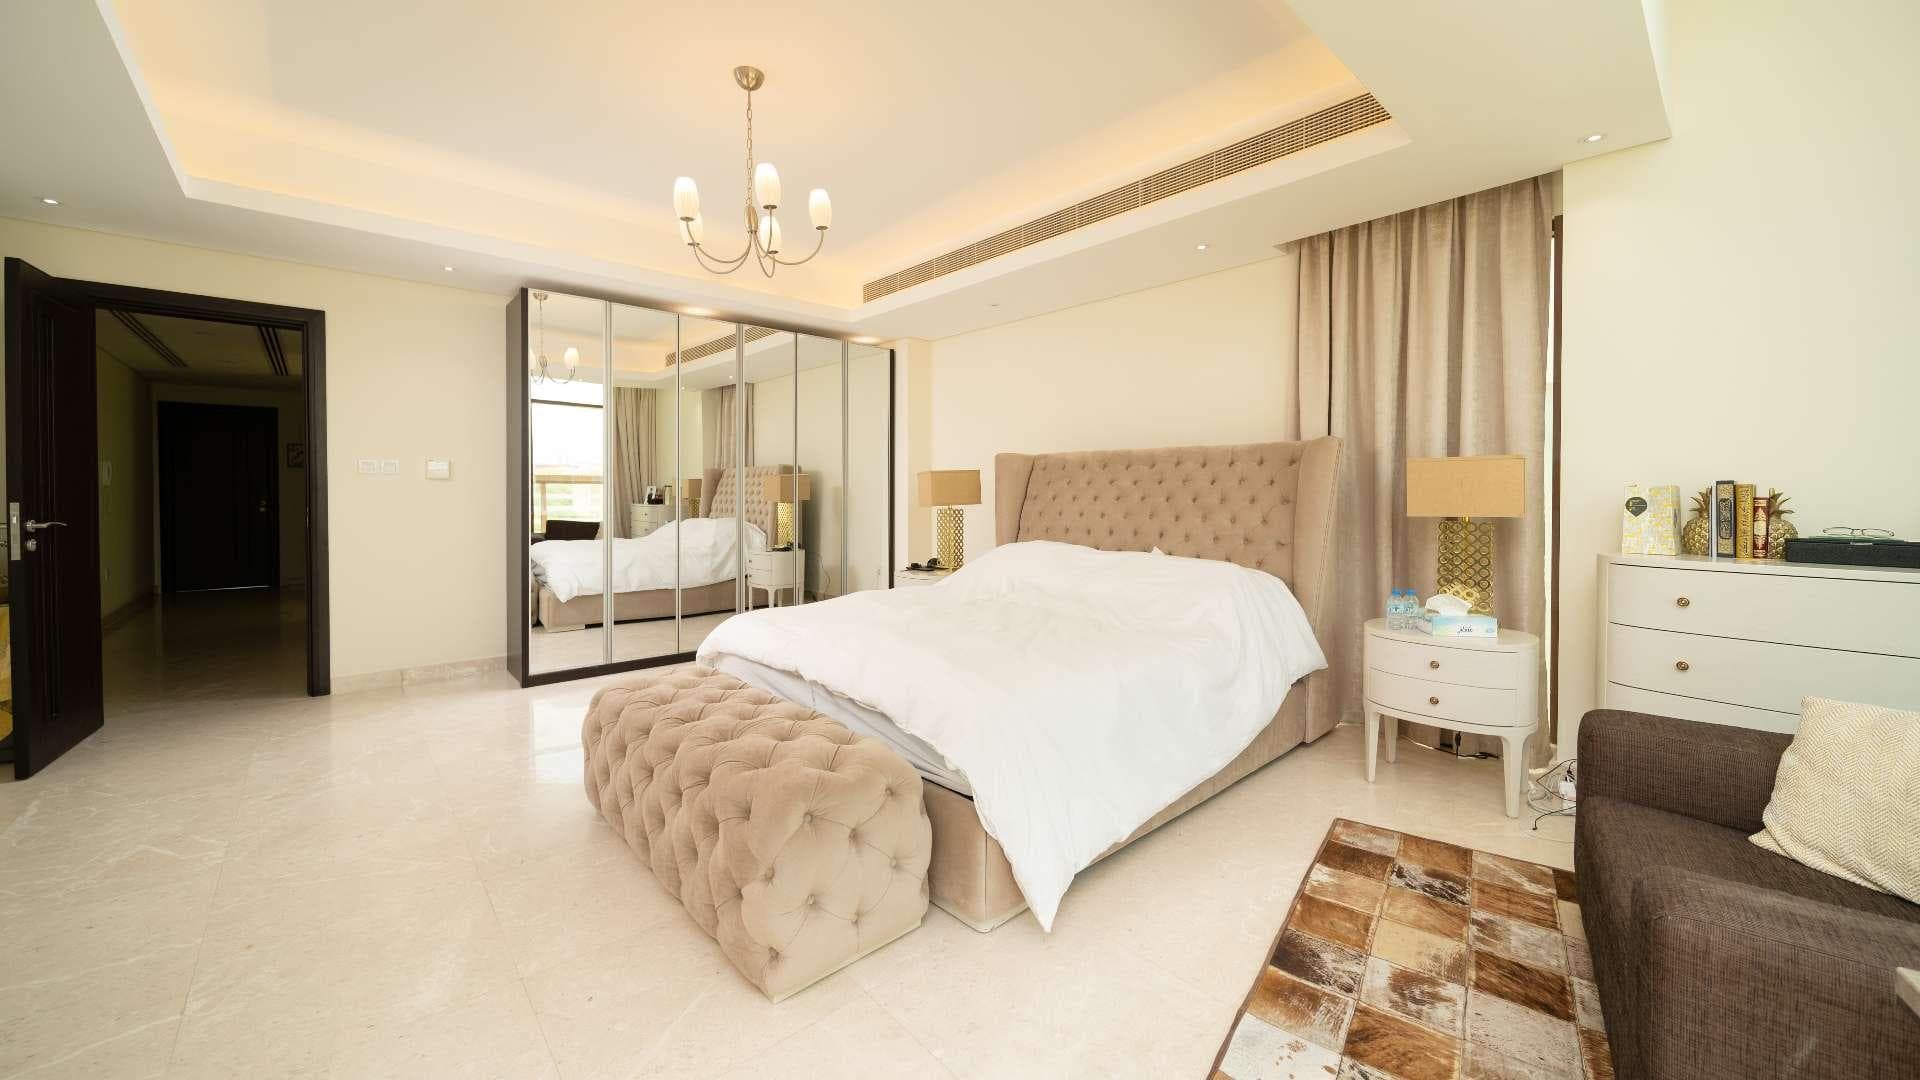 6 Bedroom Villa For Rent Grand View Lp12987 9456bf304b03c80.jpg